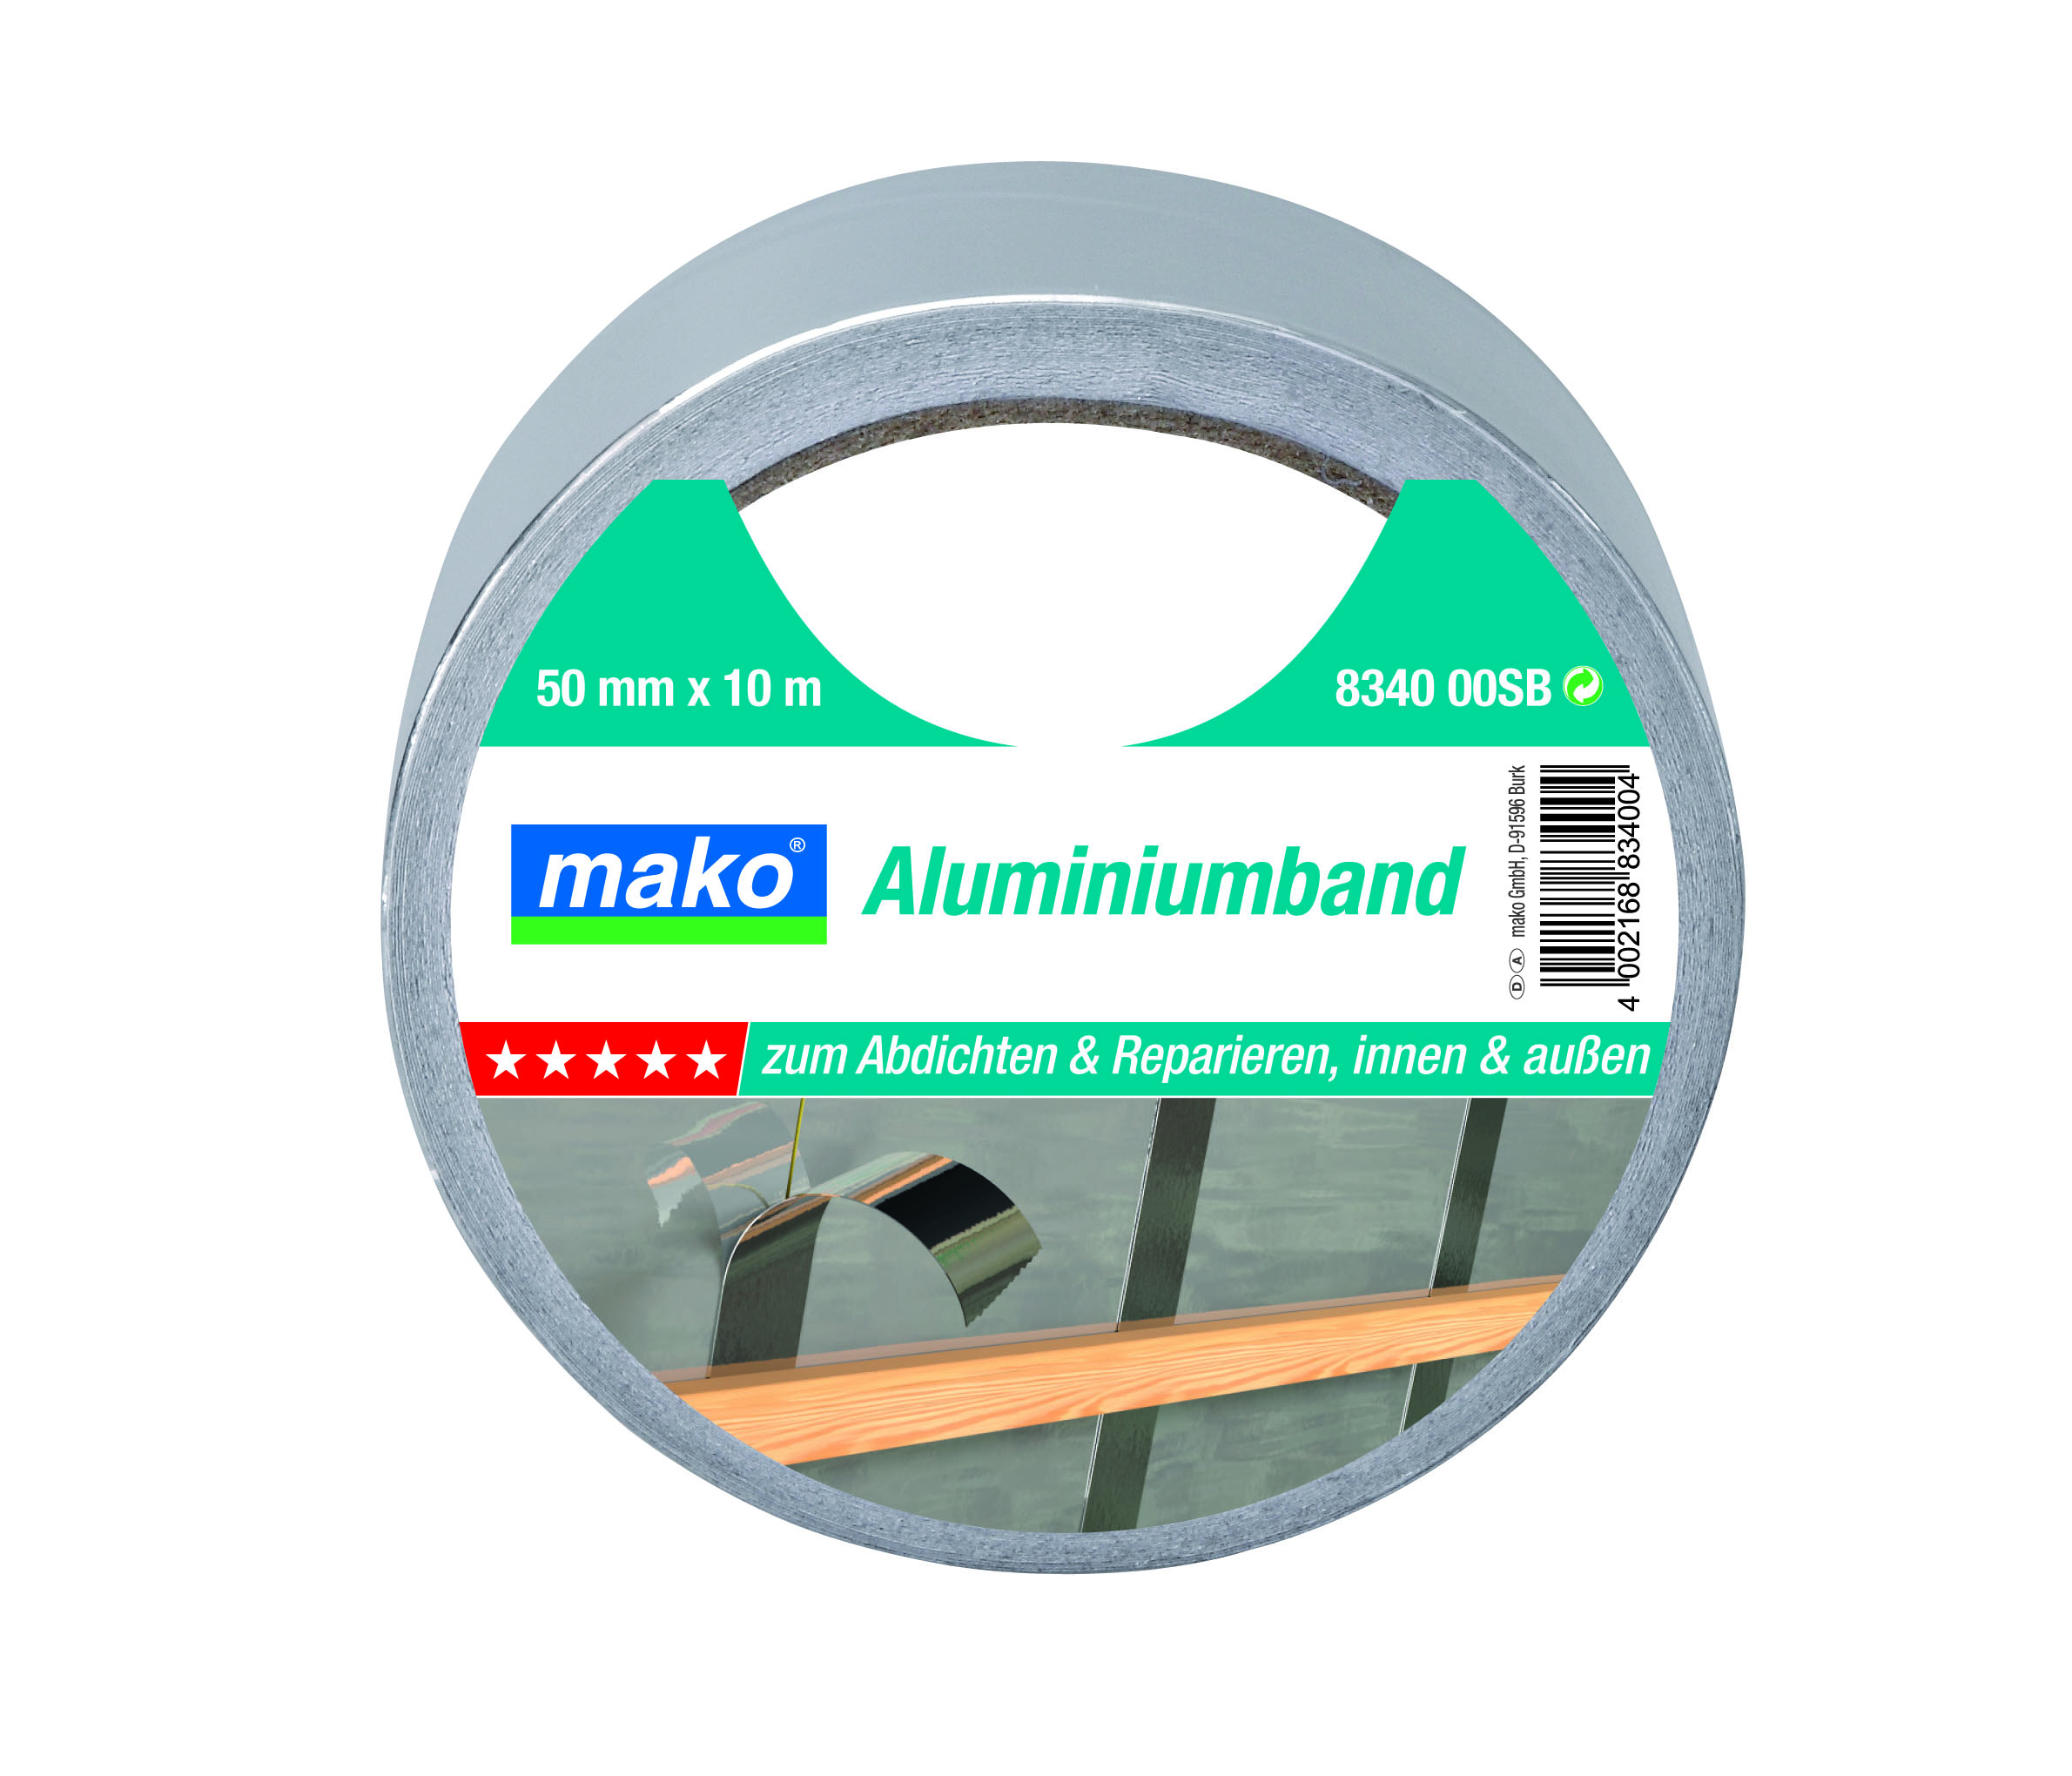 Mako Aluminiumband 50 mm x 10 m